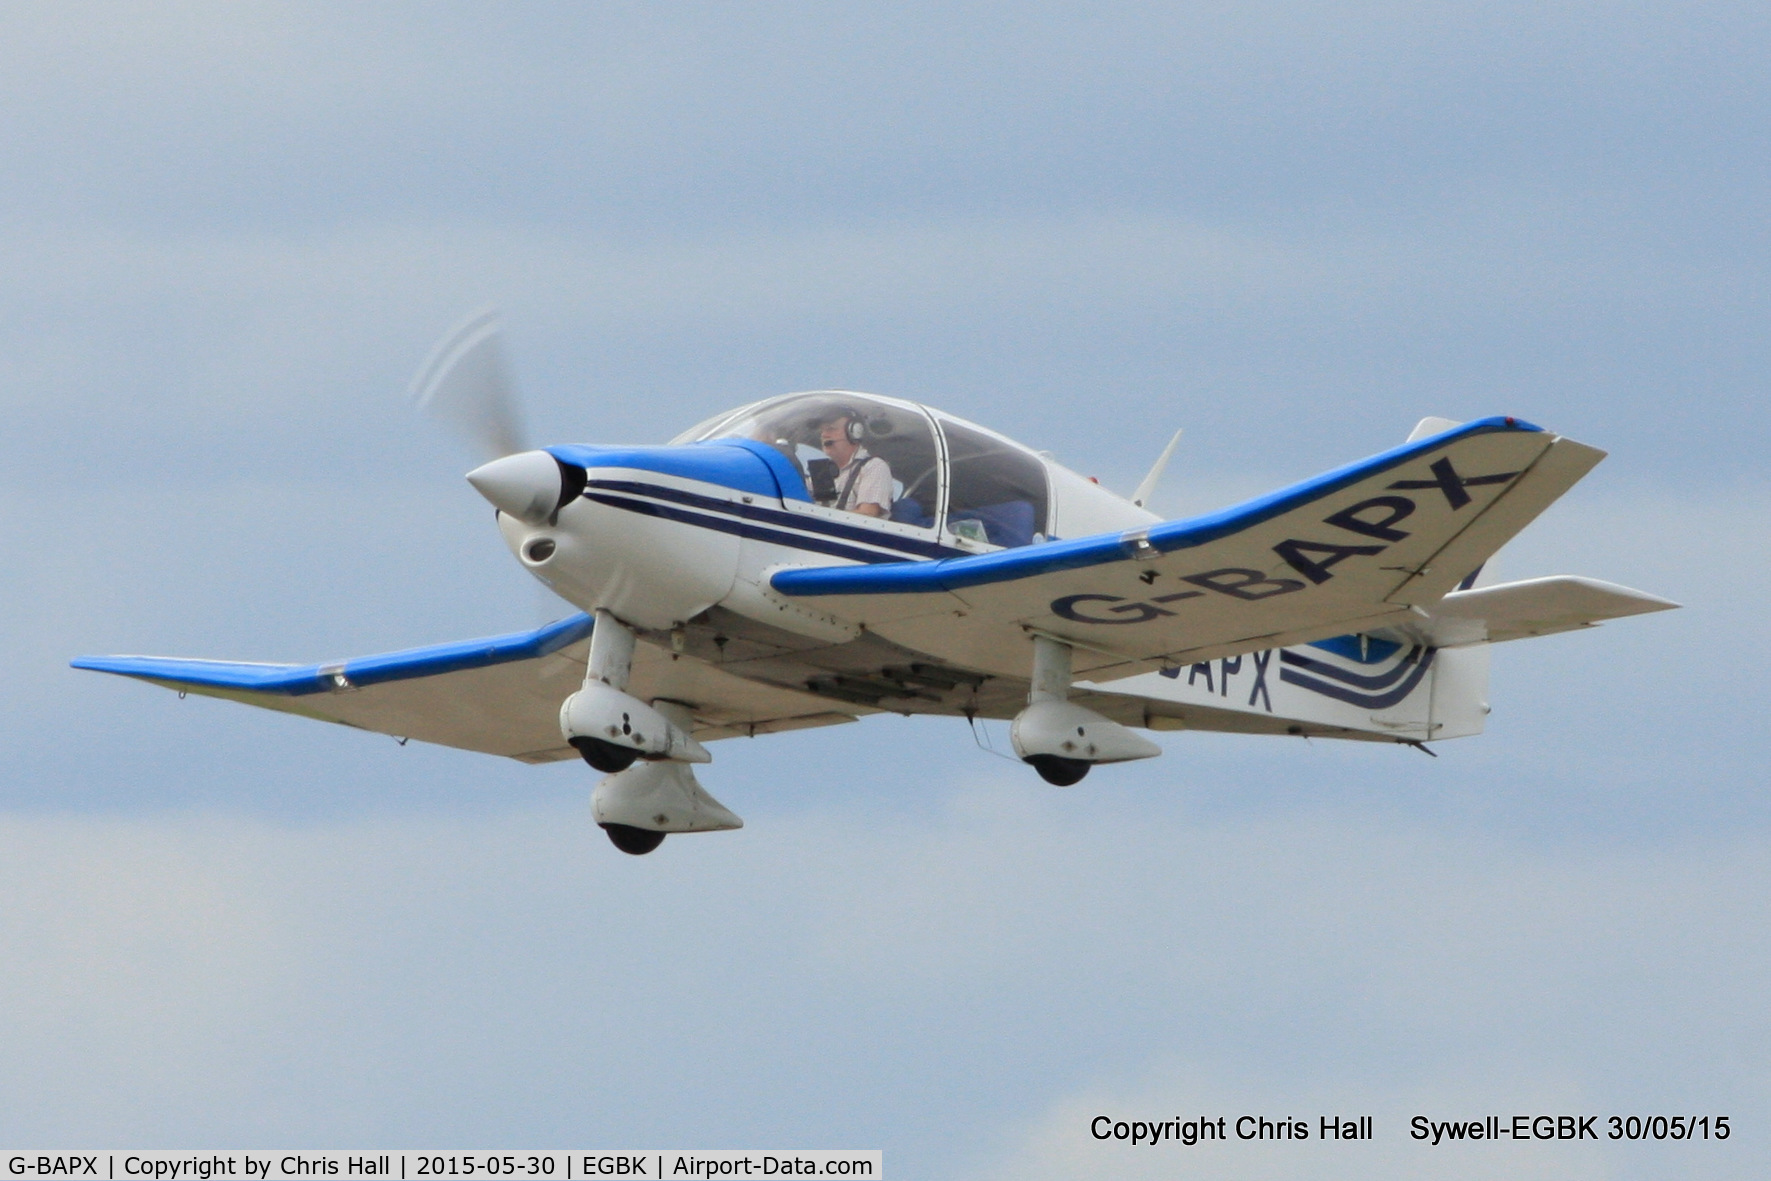 G-BAPX, 1972 Robin DR-400-160 Chevalier C/N 789, at Aeroexpo 2015